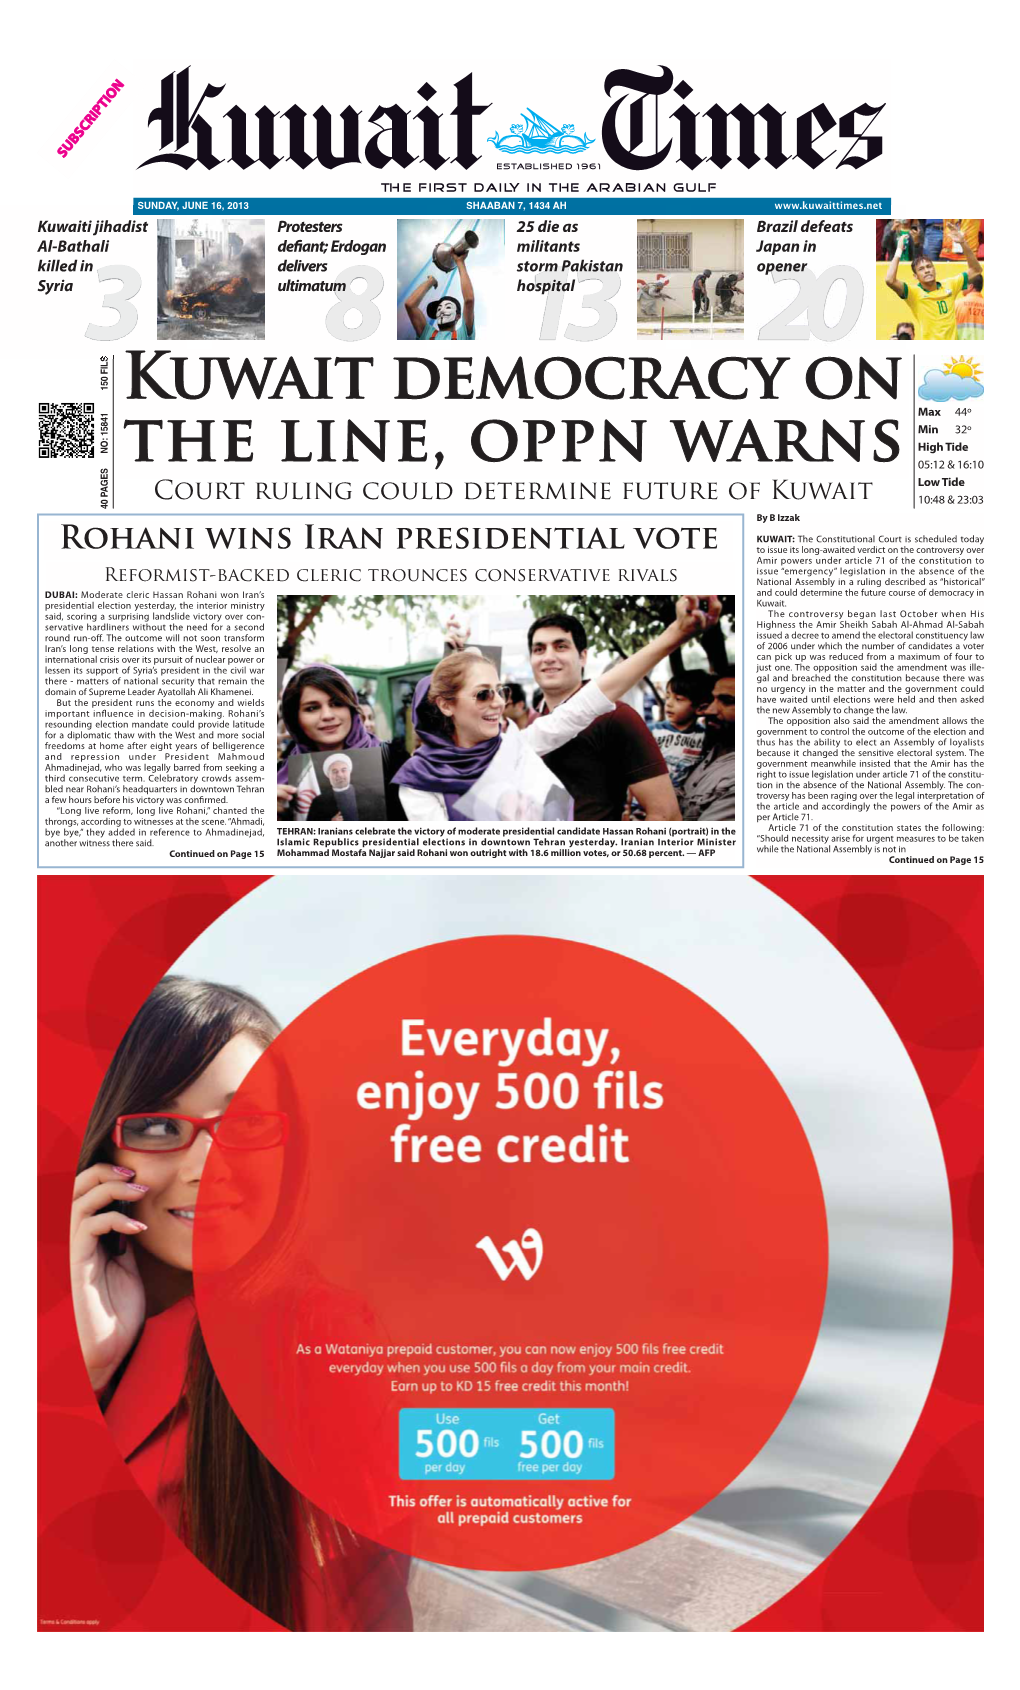 Kuwait Democracy on the Line, Oppn Warns